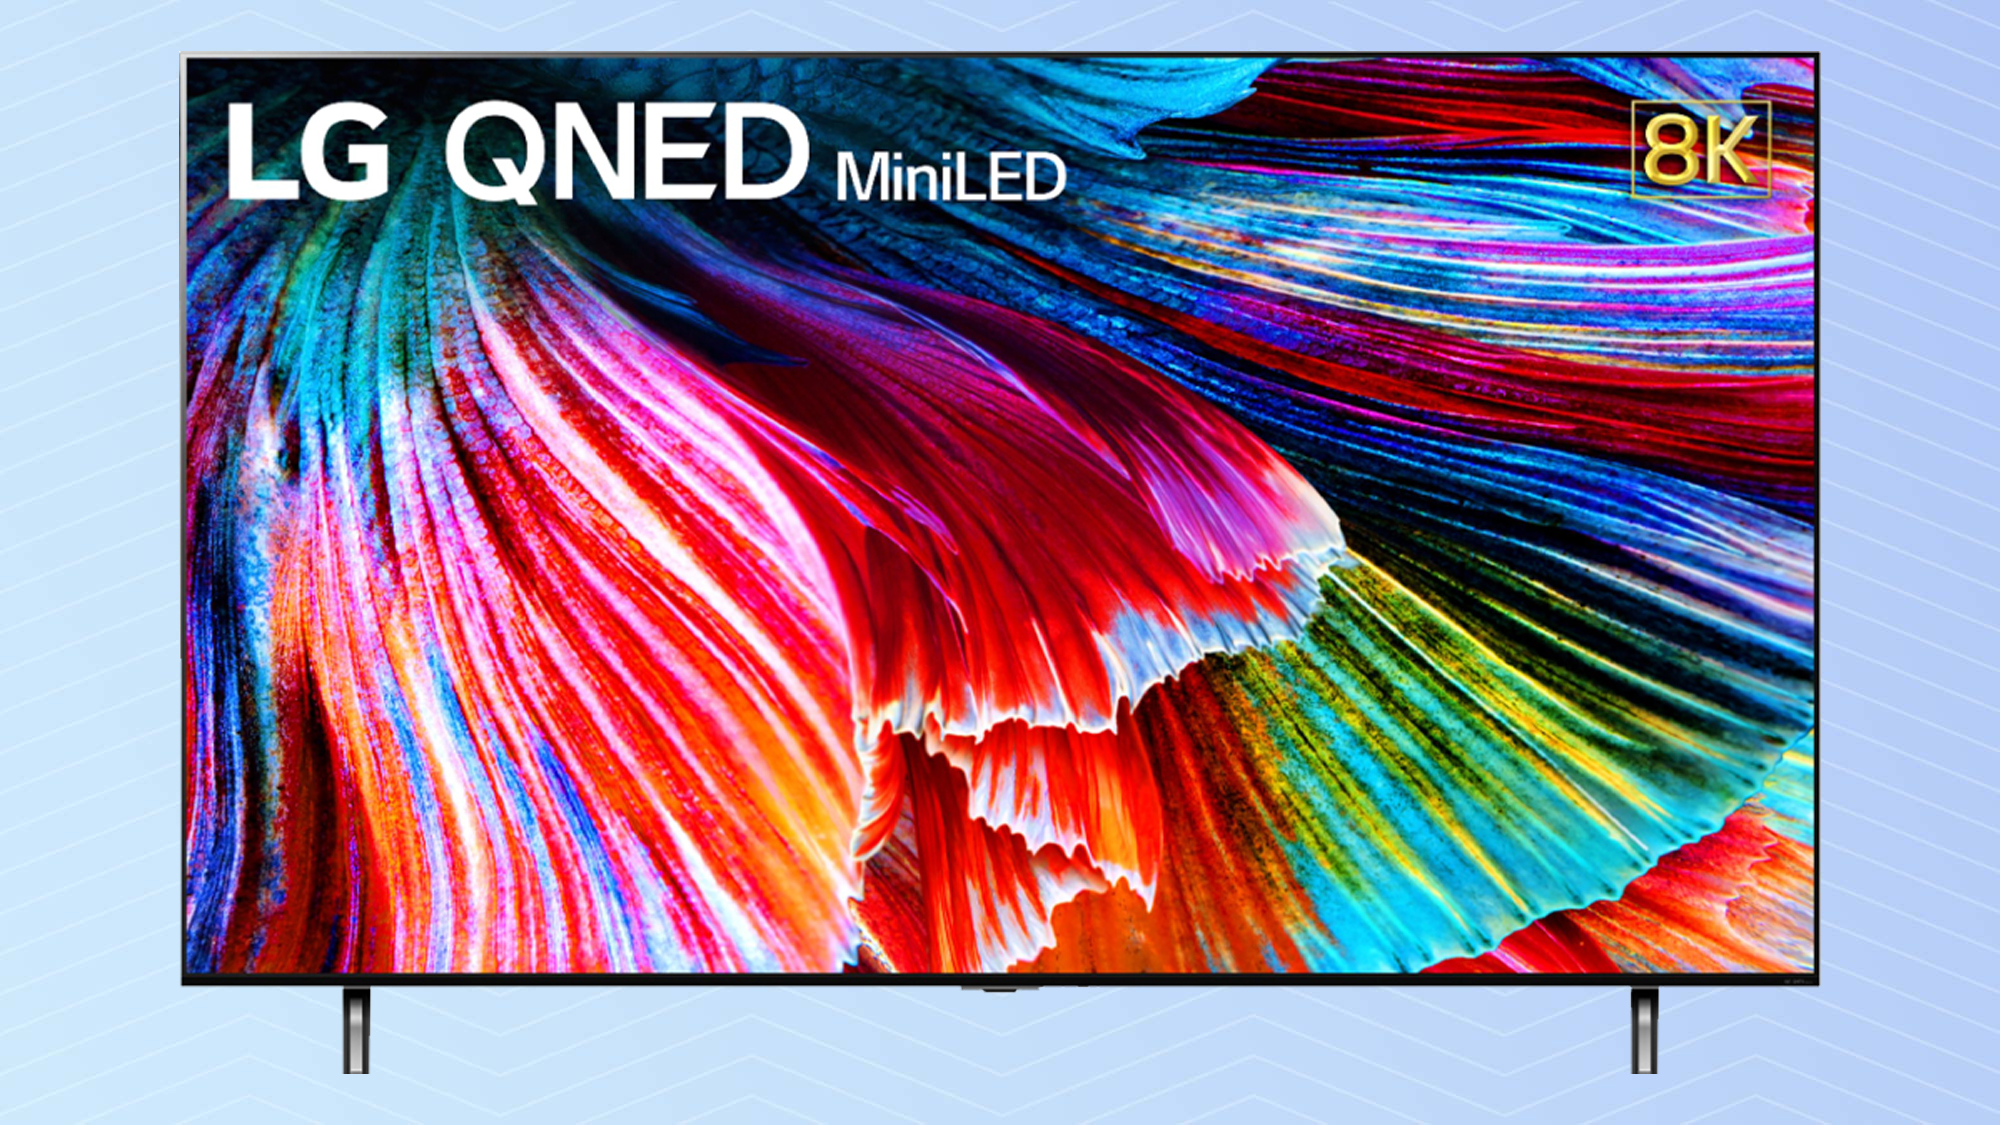 LG QNED MiniLED 99 Series 8K TV